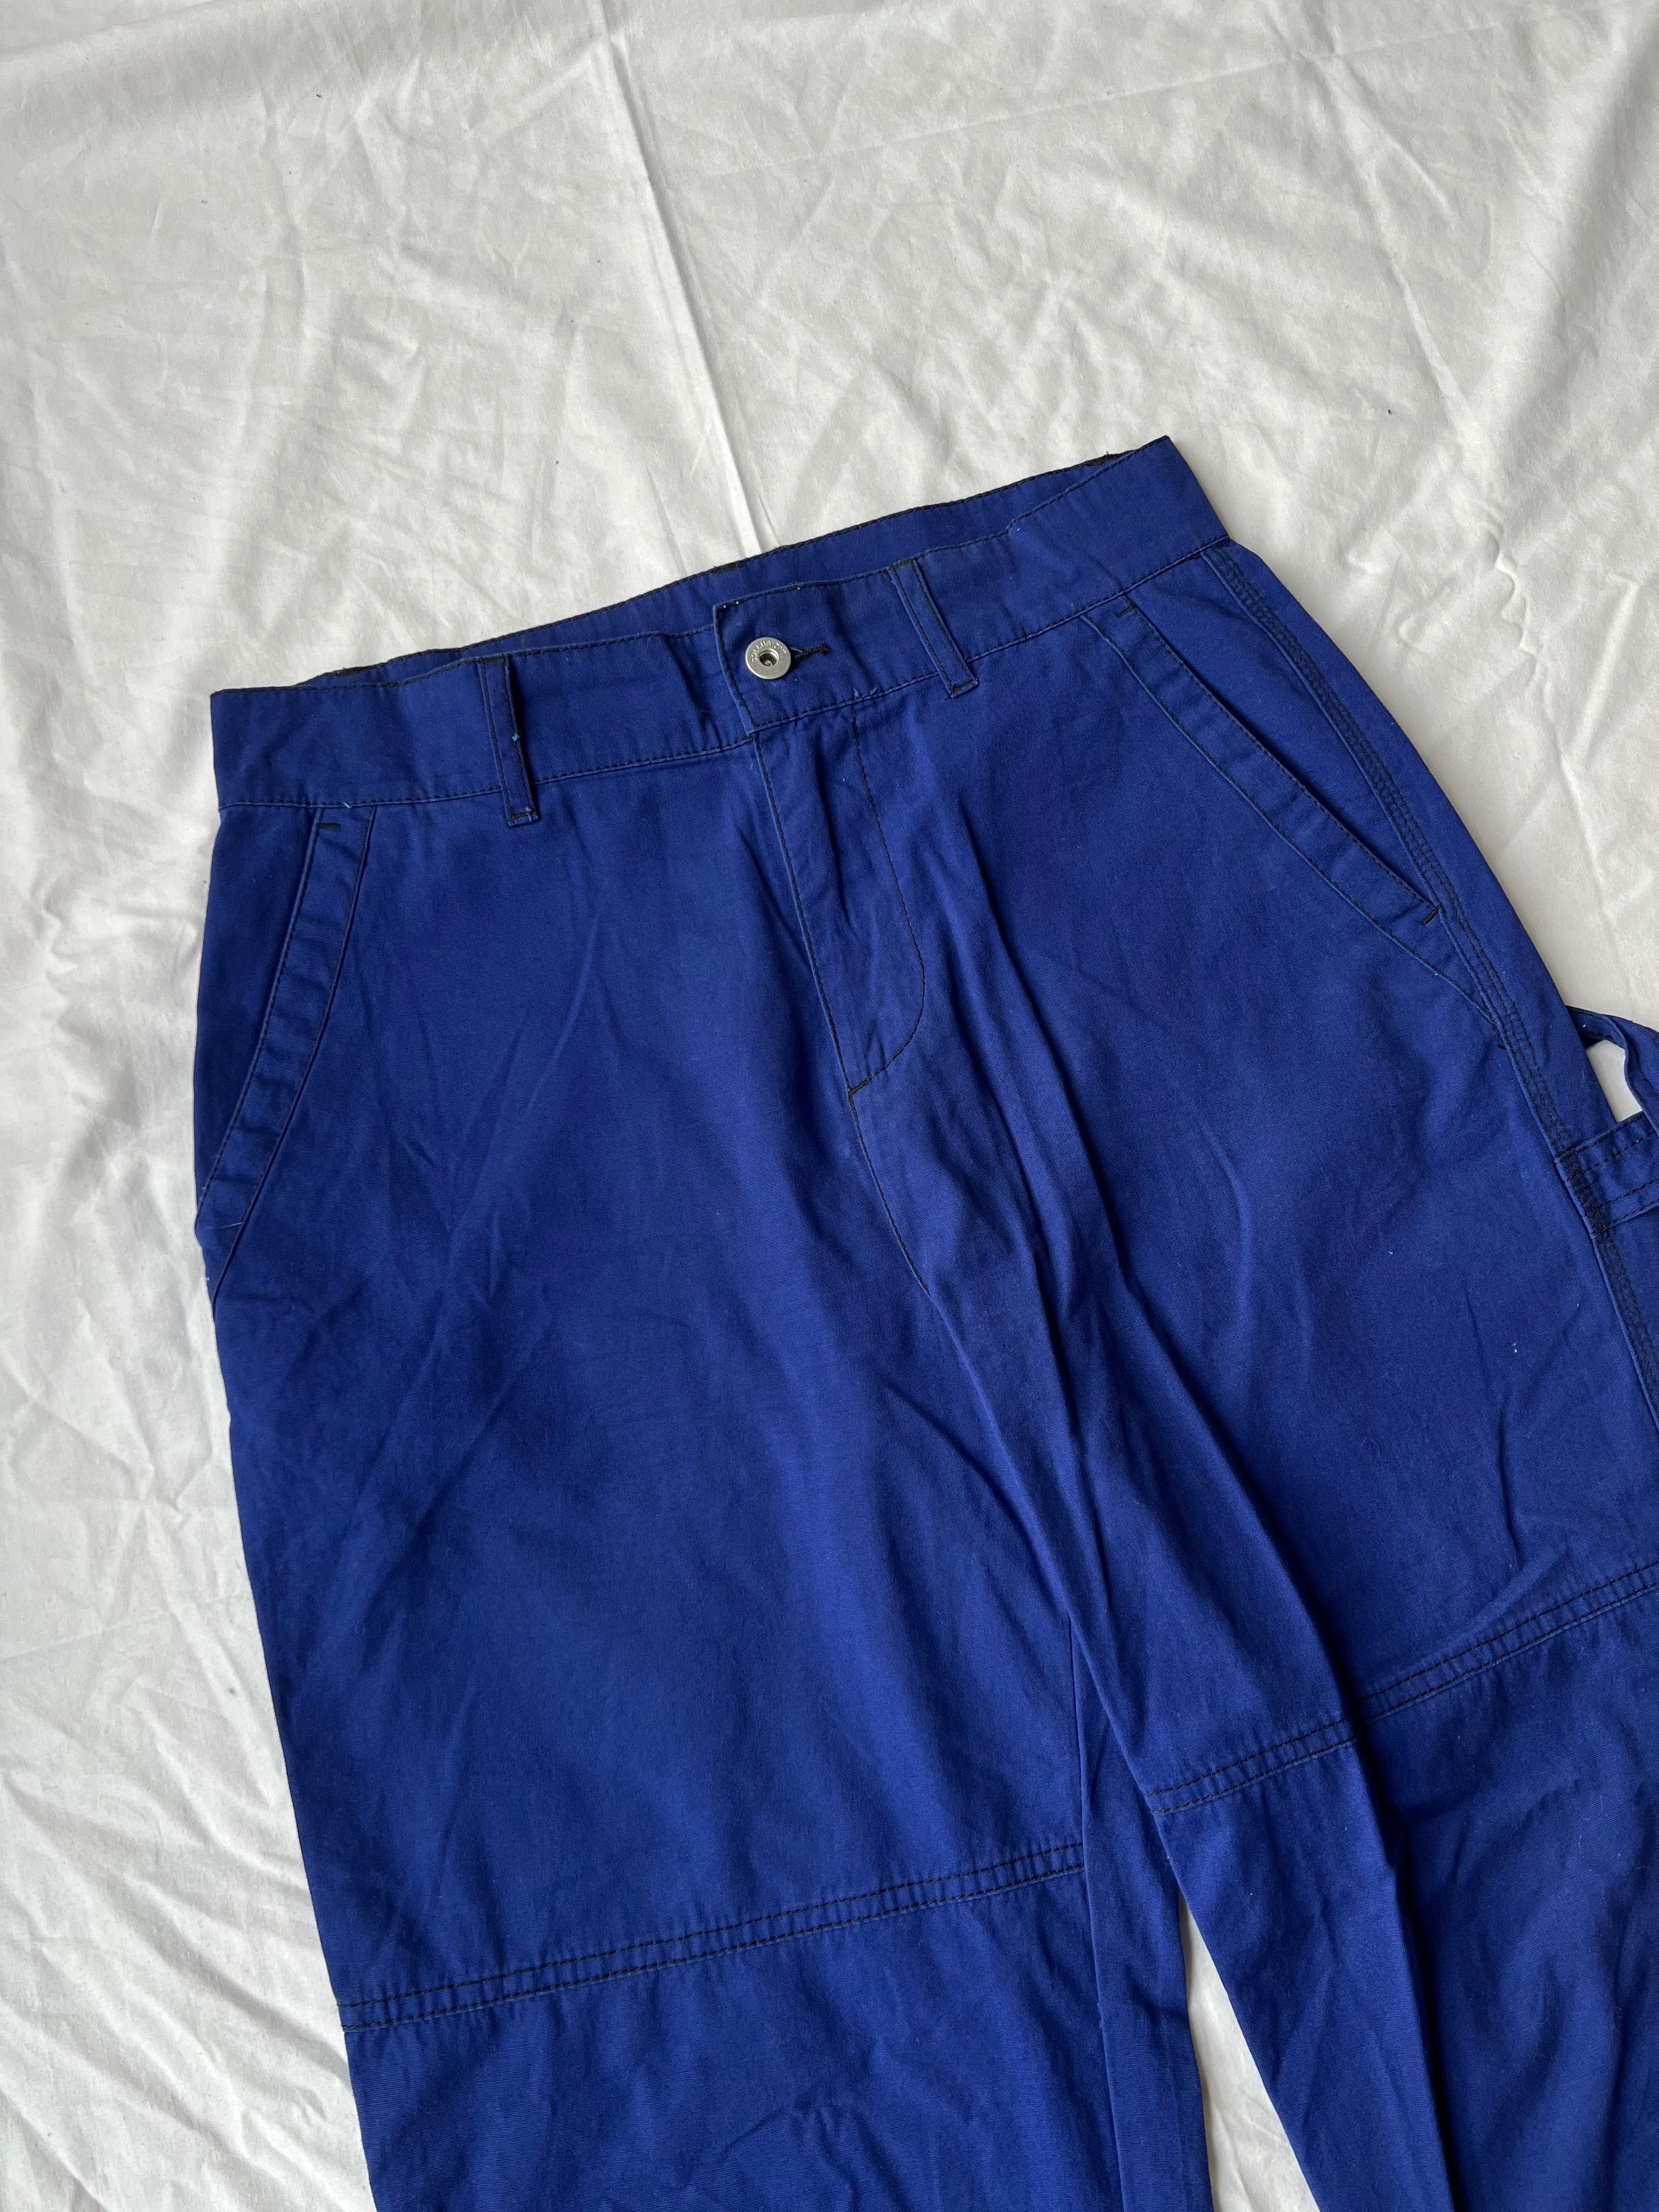 Asos Collusion spodnie ciemno niebieskie W28L32